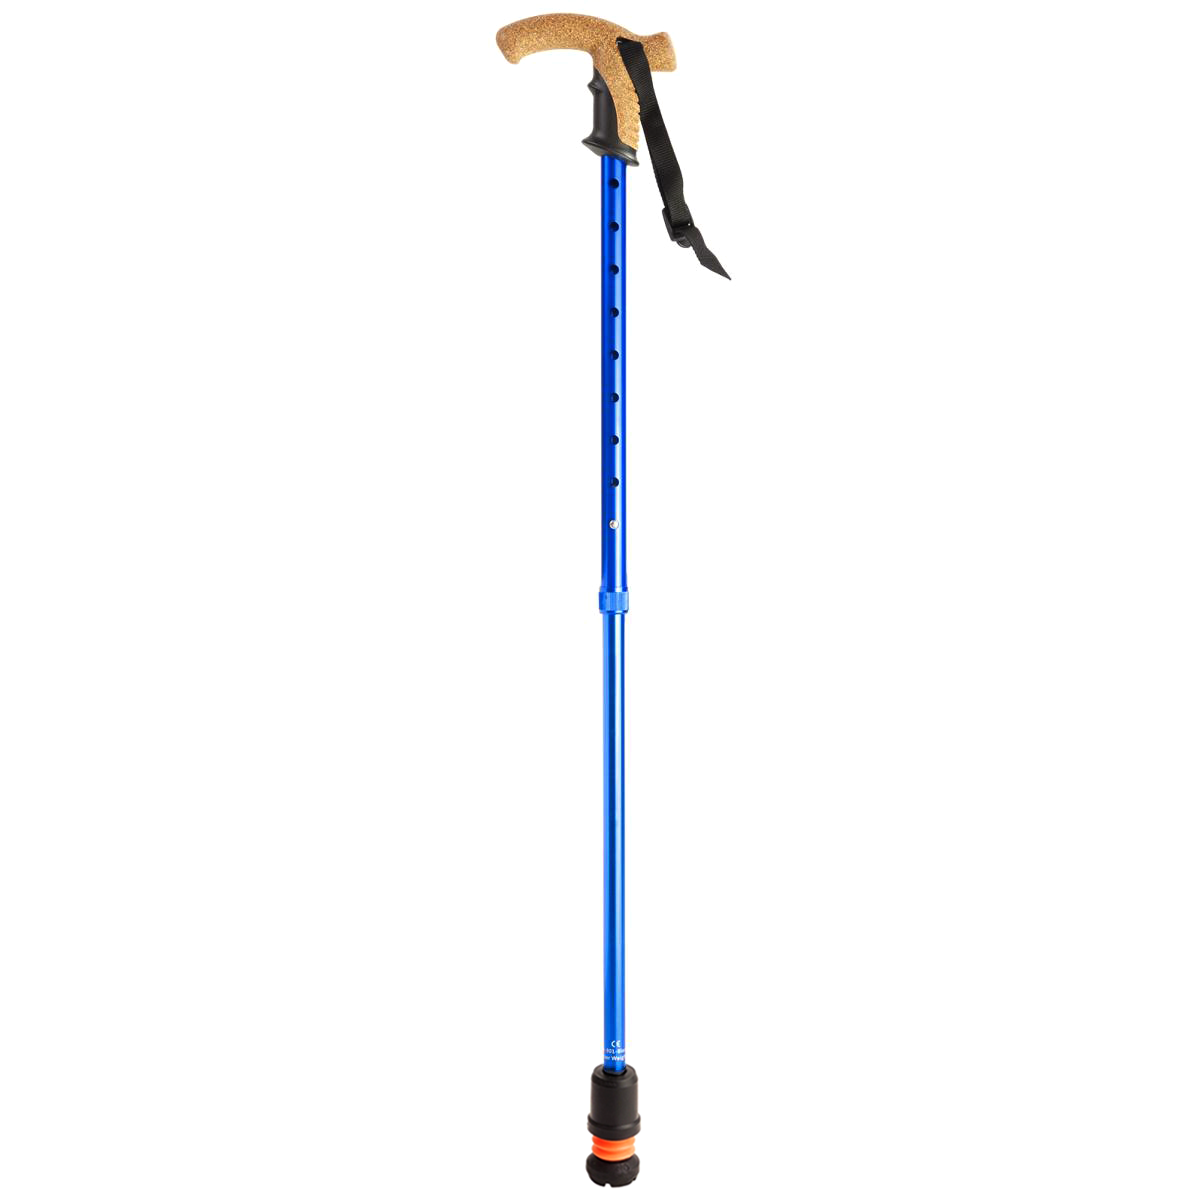 A single blue Flexyfoot Premium Cork Handle Walking Stick